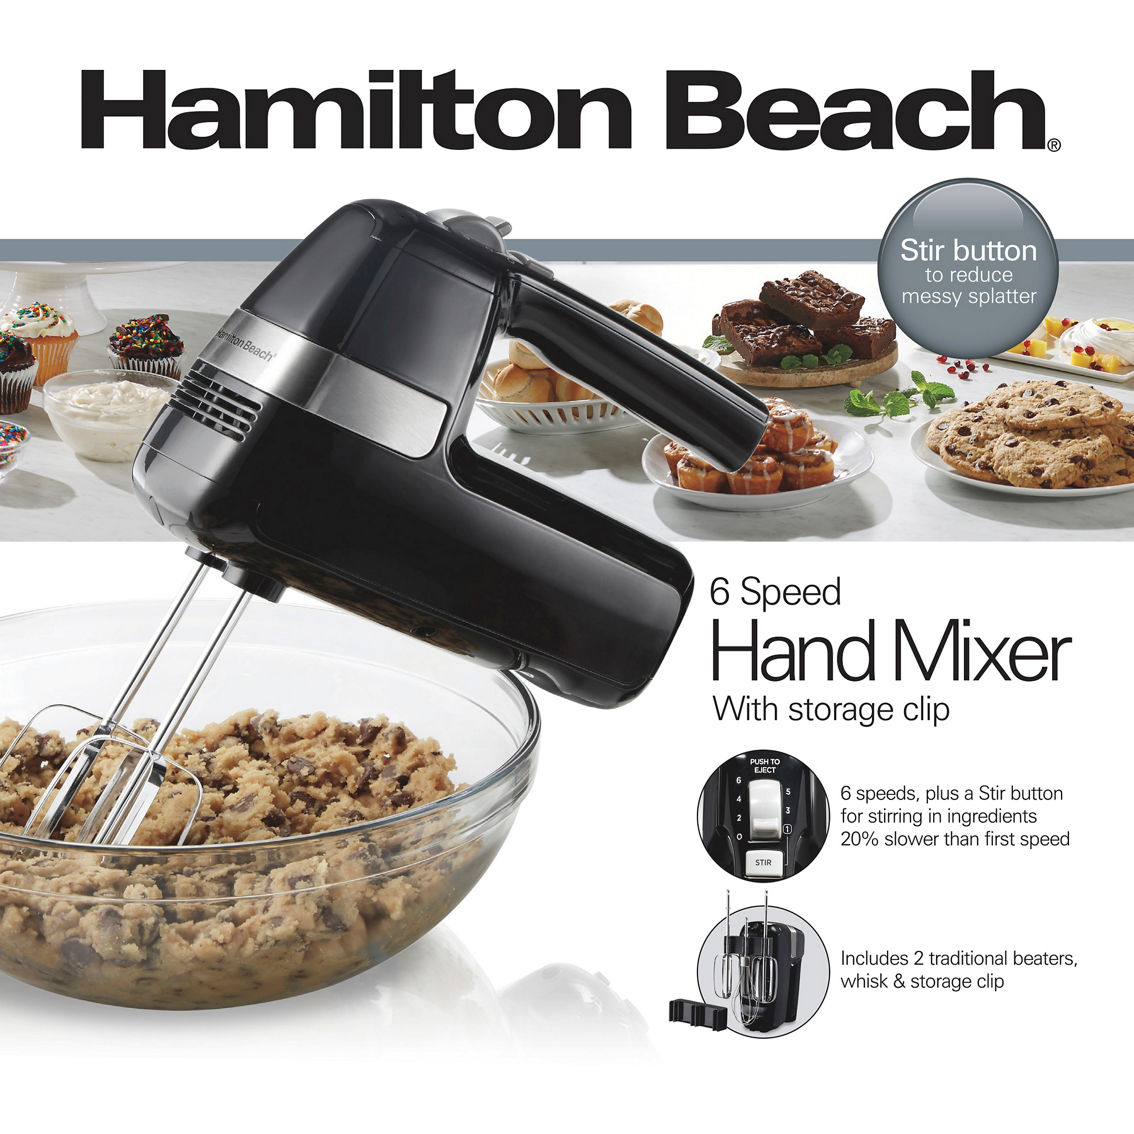 Hamilton Beach 6 Speed Hand Mixer with Storage Clip - Image 3 of 3